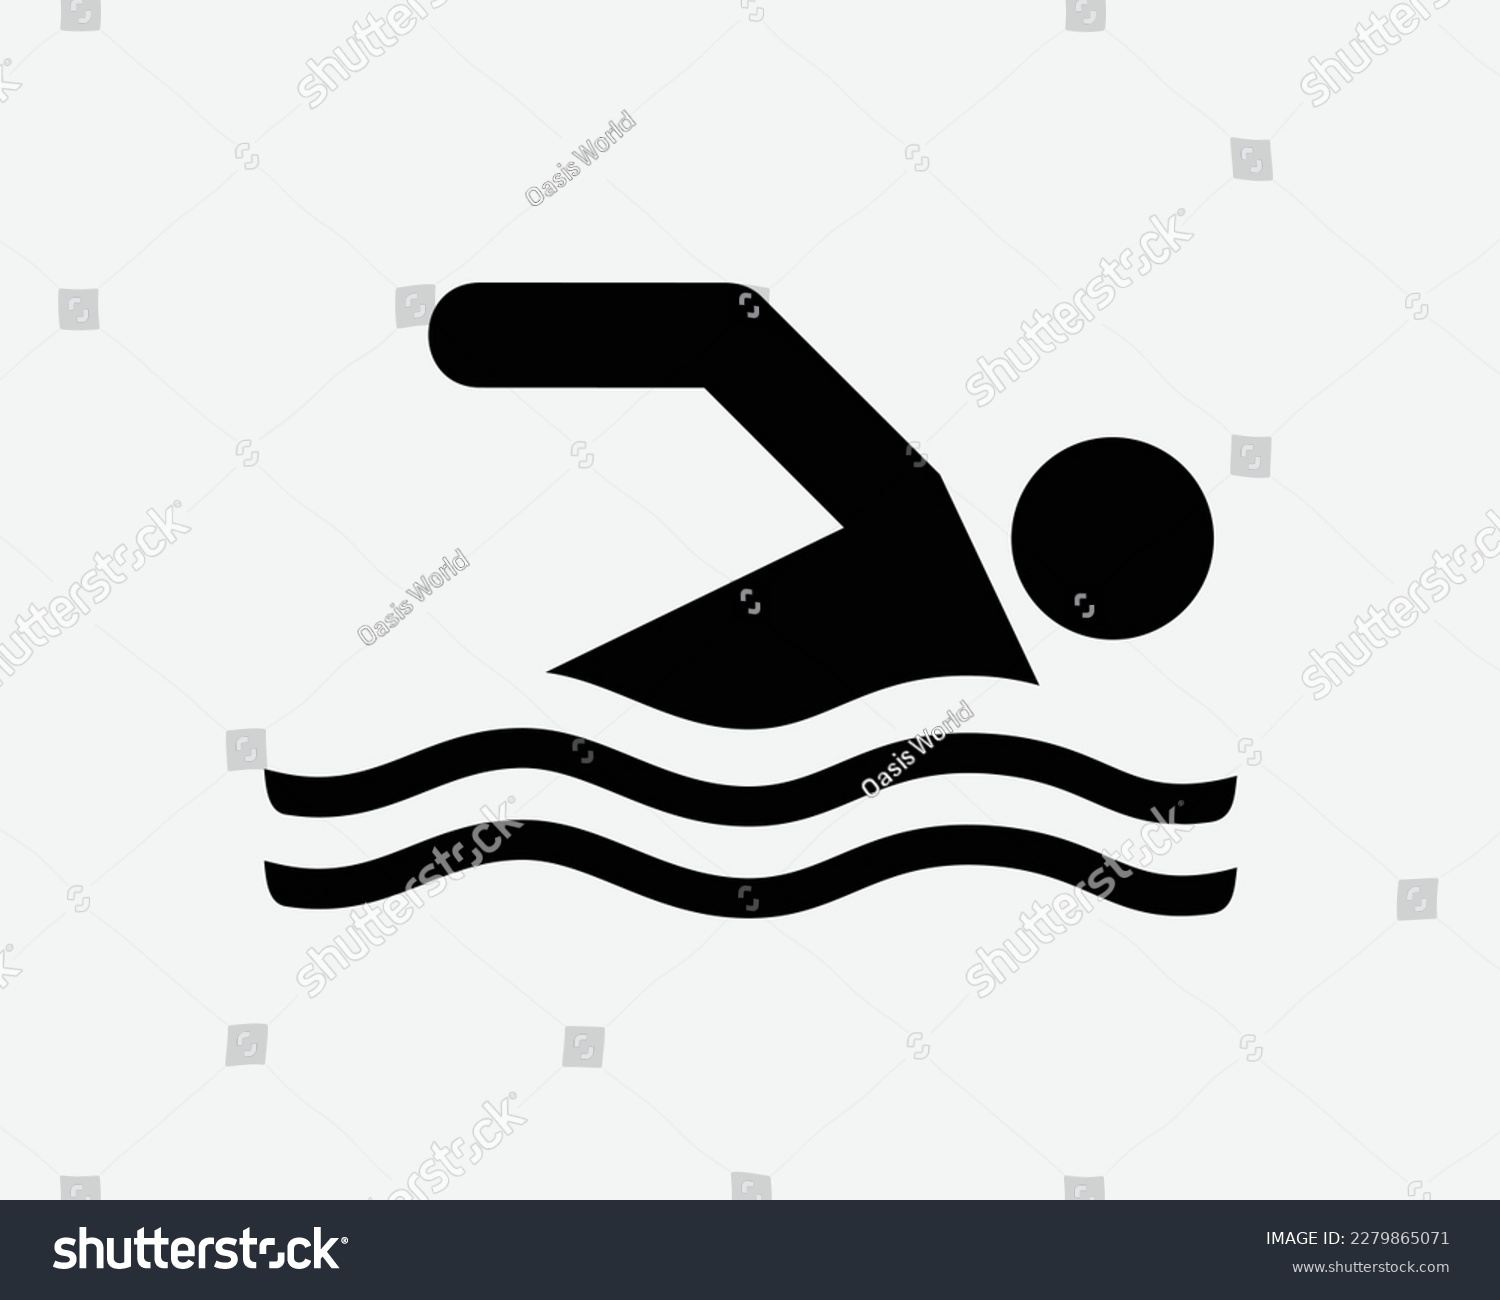 SVG of Swimming Icon Swim Swimmer Man Stick Figure Sport Athlete Vector Black White Silhouette Symbol Sign Graphic Clipart Artwork Illustration Pictogram svg